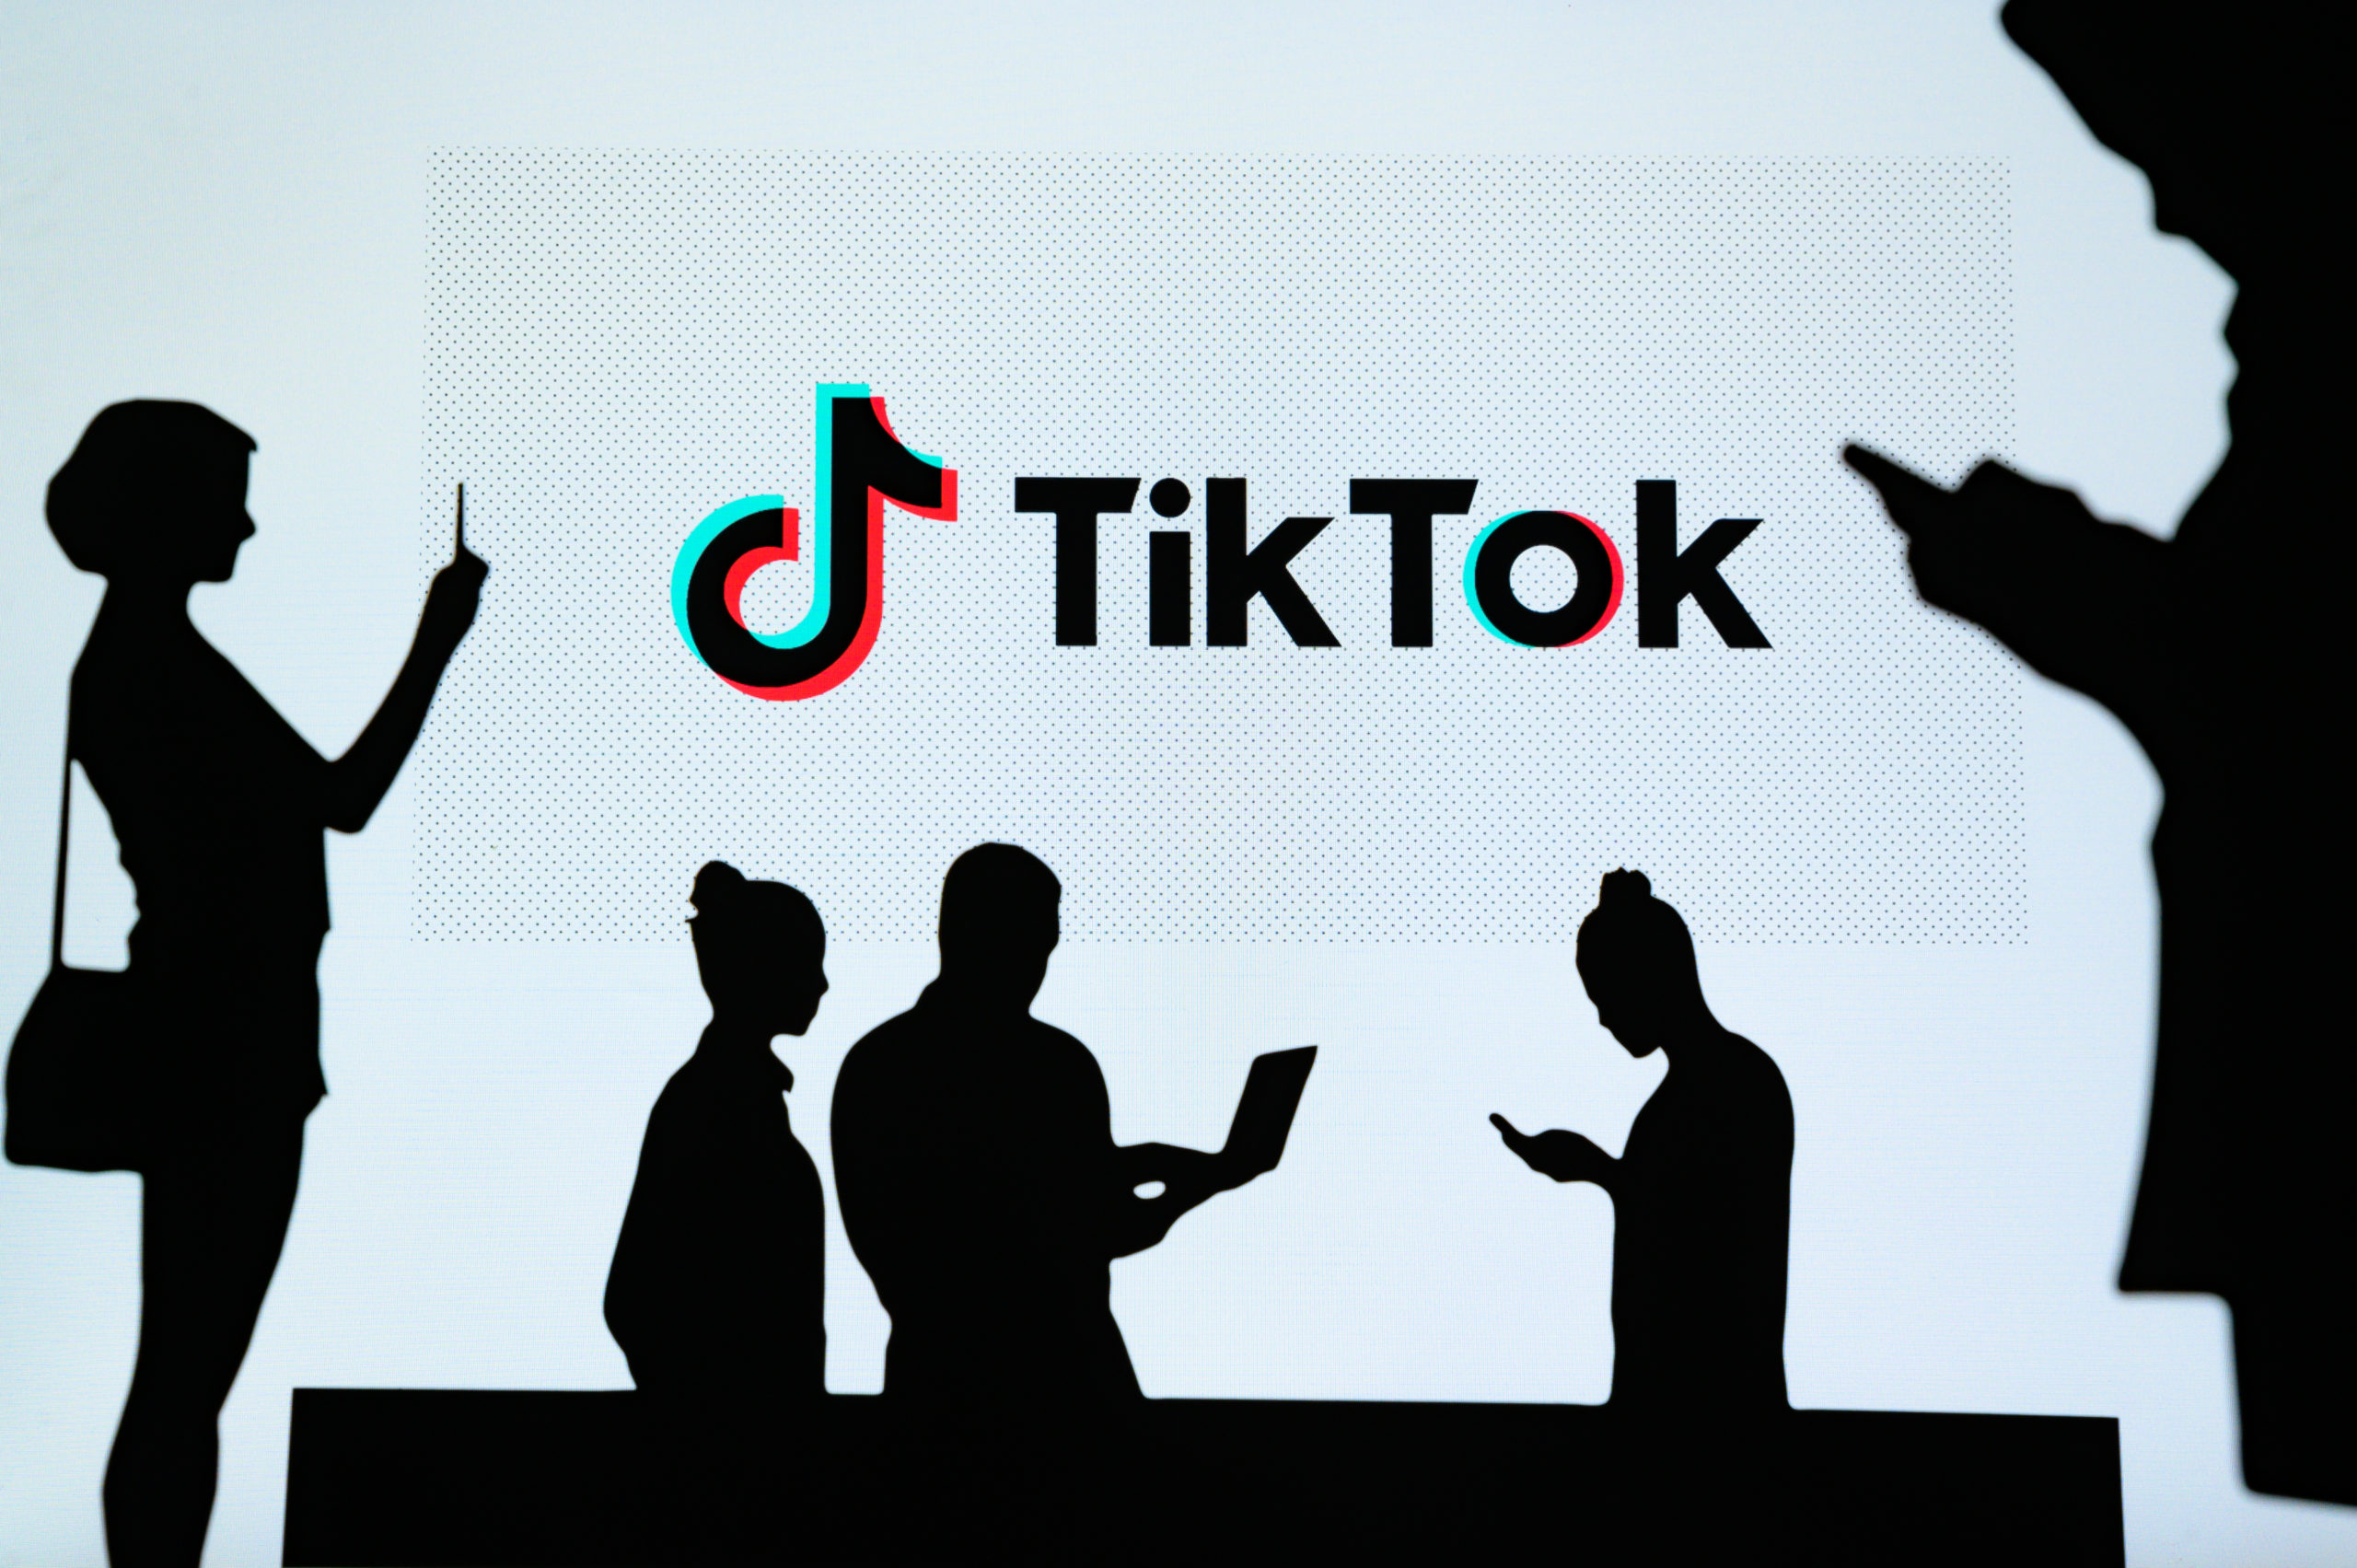 How to turn on analytics on TikTok